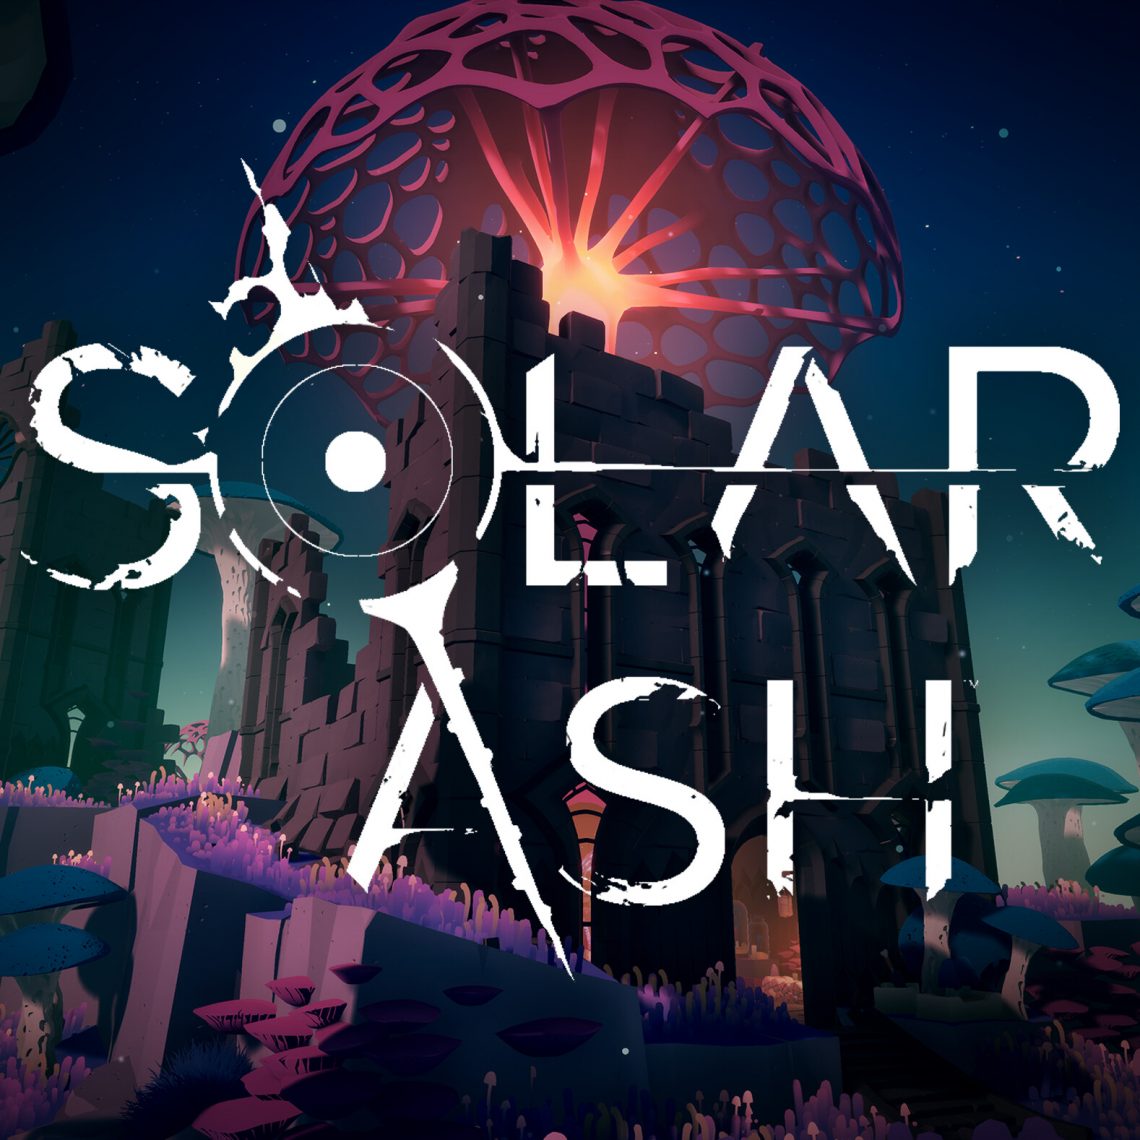 free download solar ash playstation